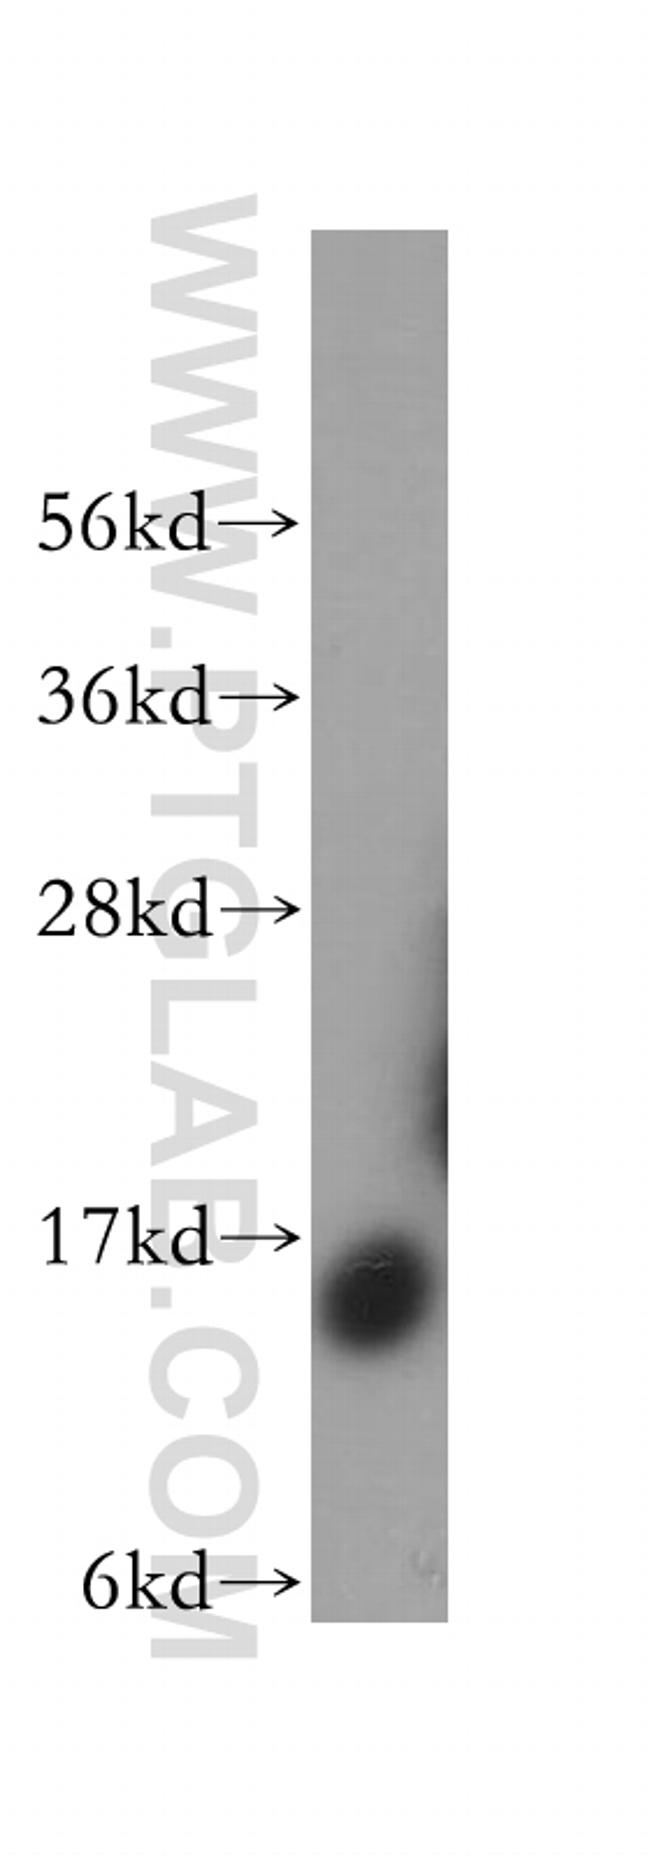 SDHC Antibody in Western Blot (WB)